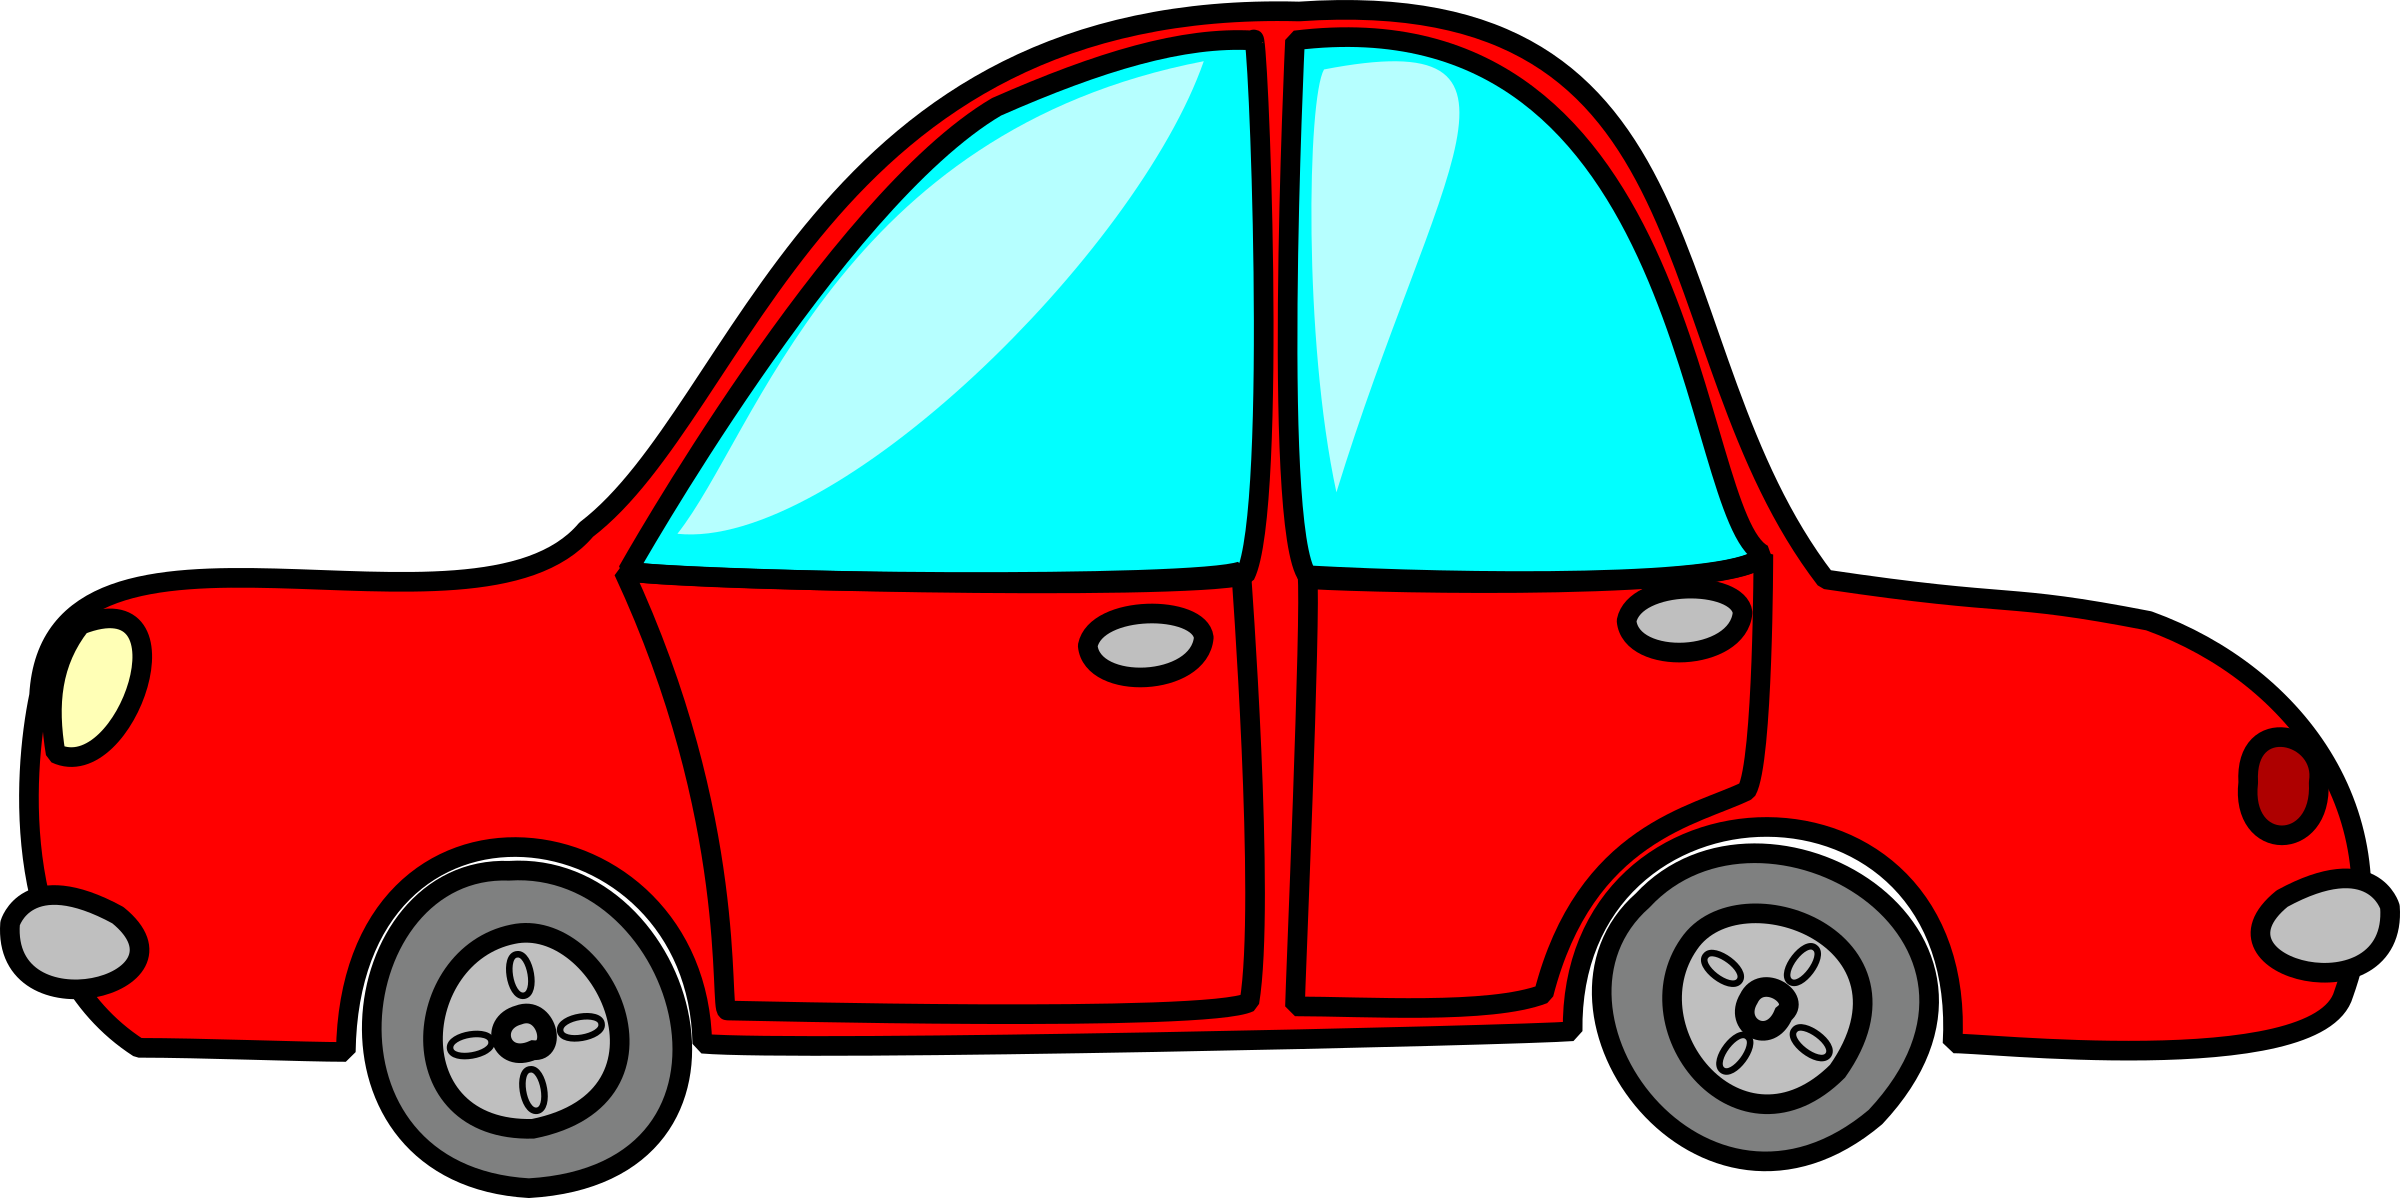 Toy car - Toy Car Clipart